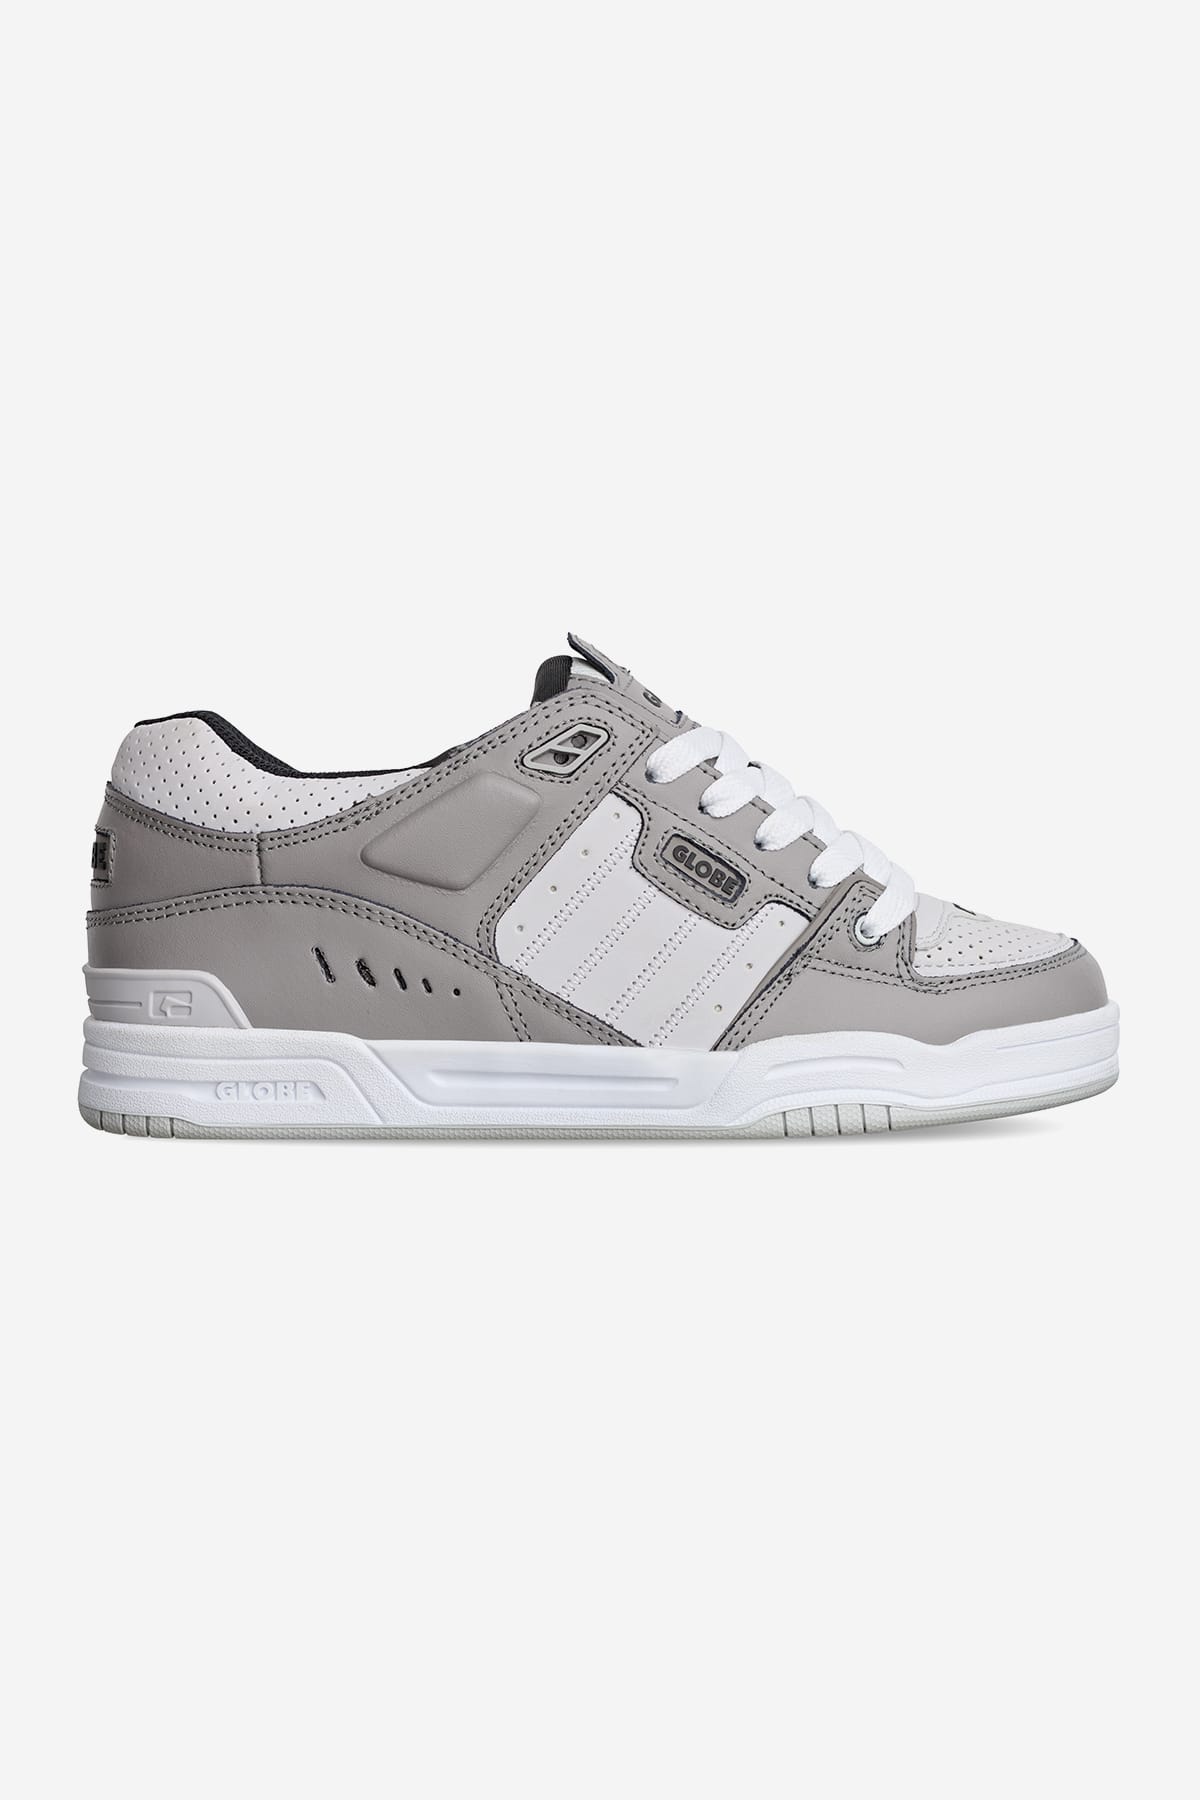 Shop Fusion - Grey/Fade - Skate Shoes